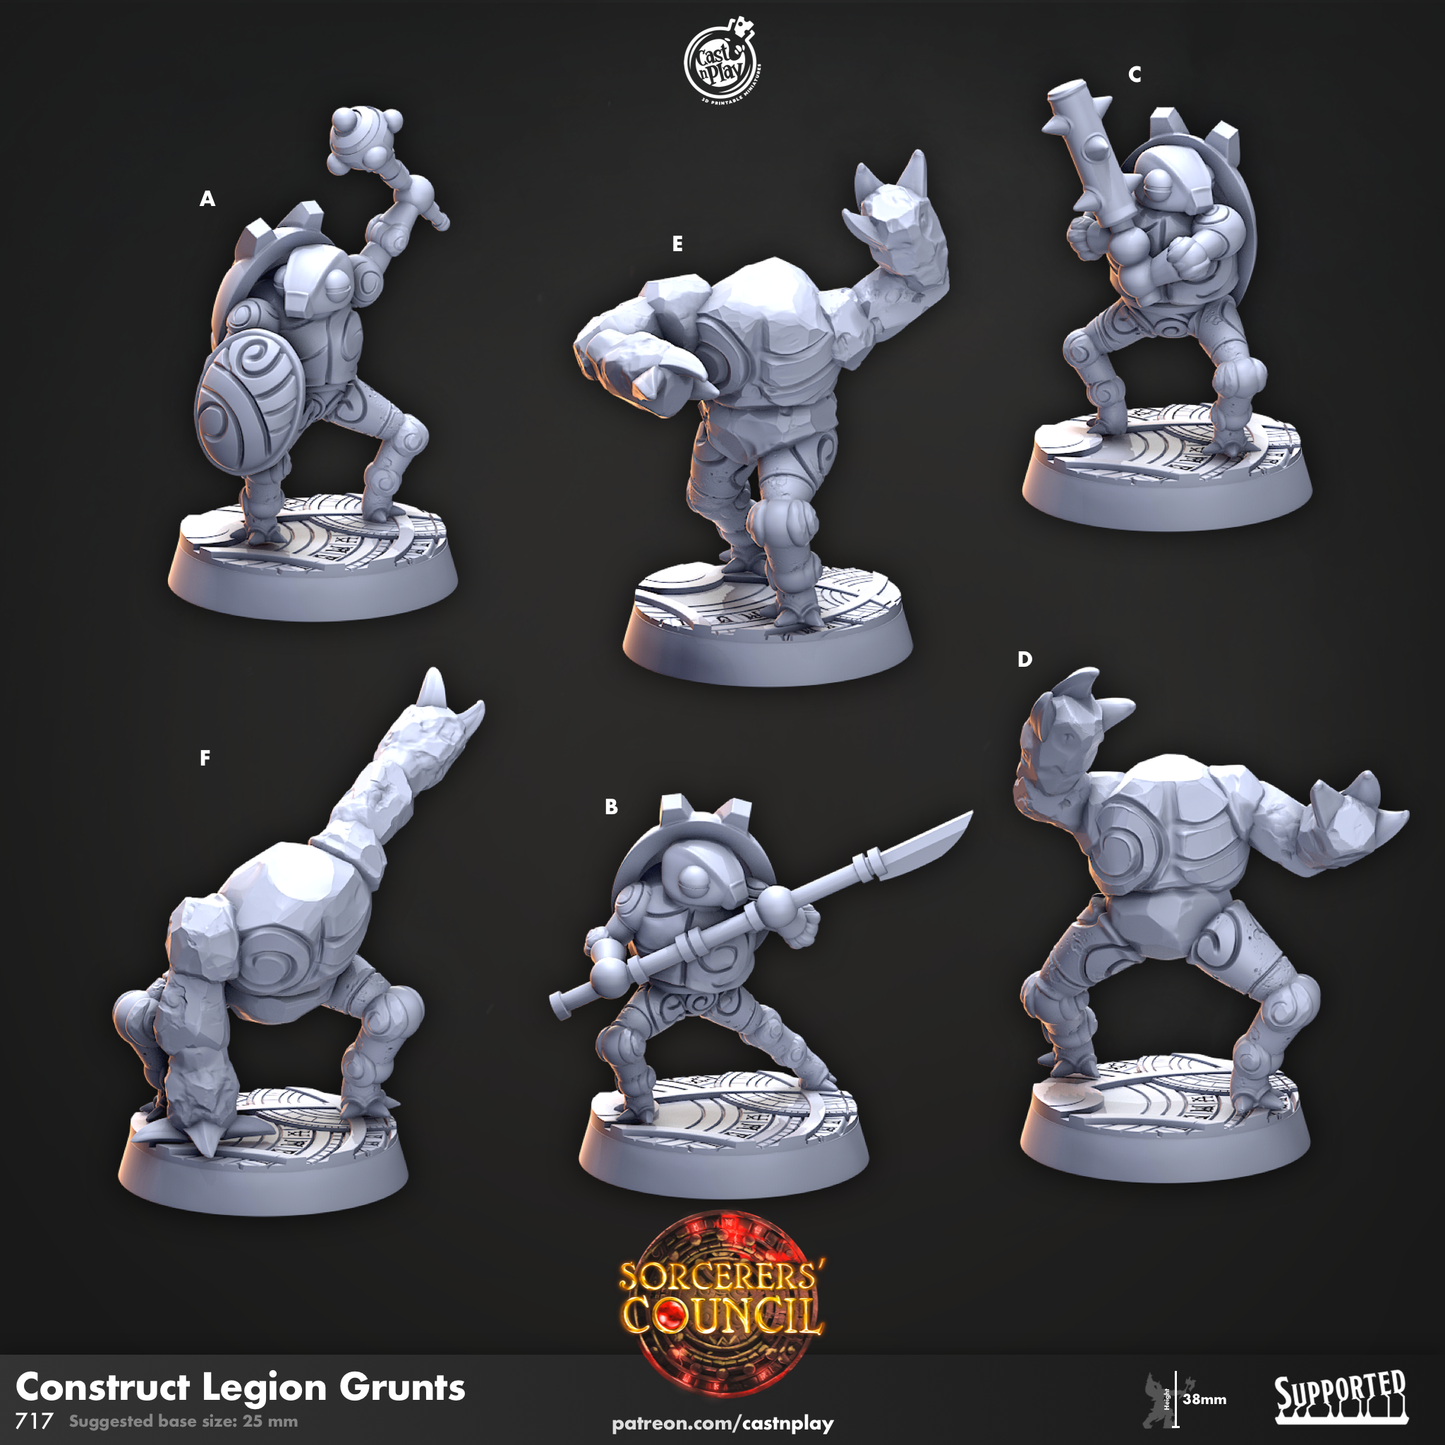 Construct Legion Grunts - Sorcerers Counceul